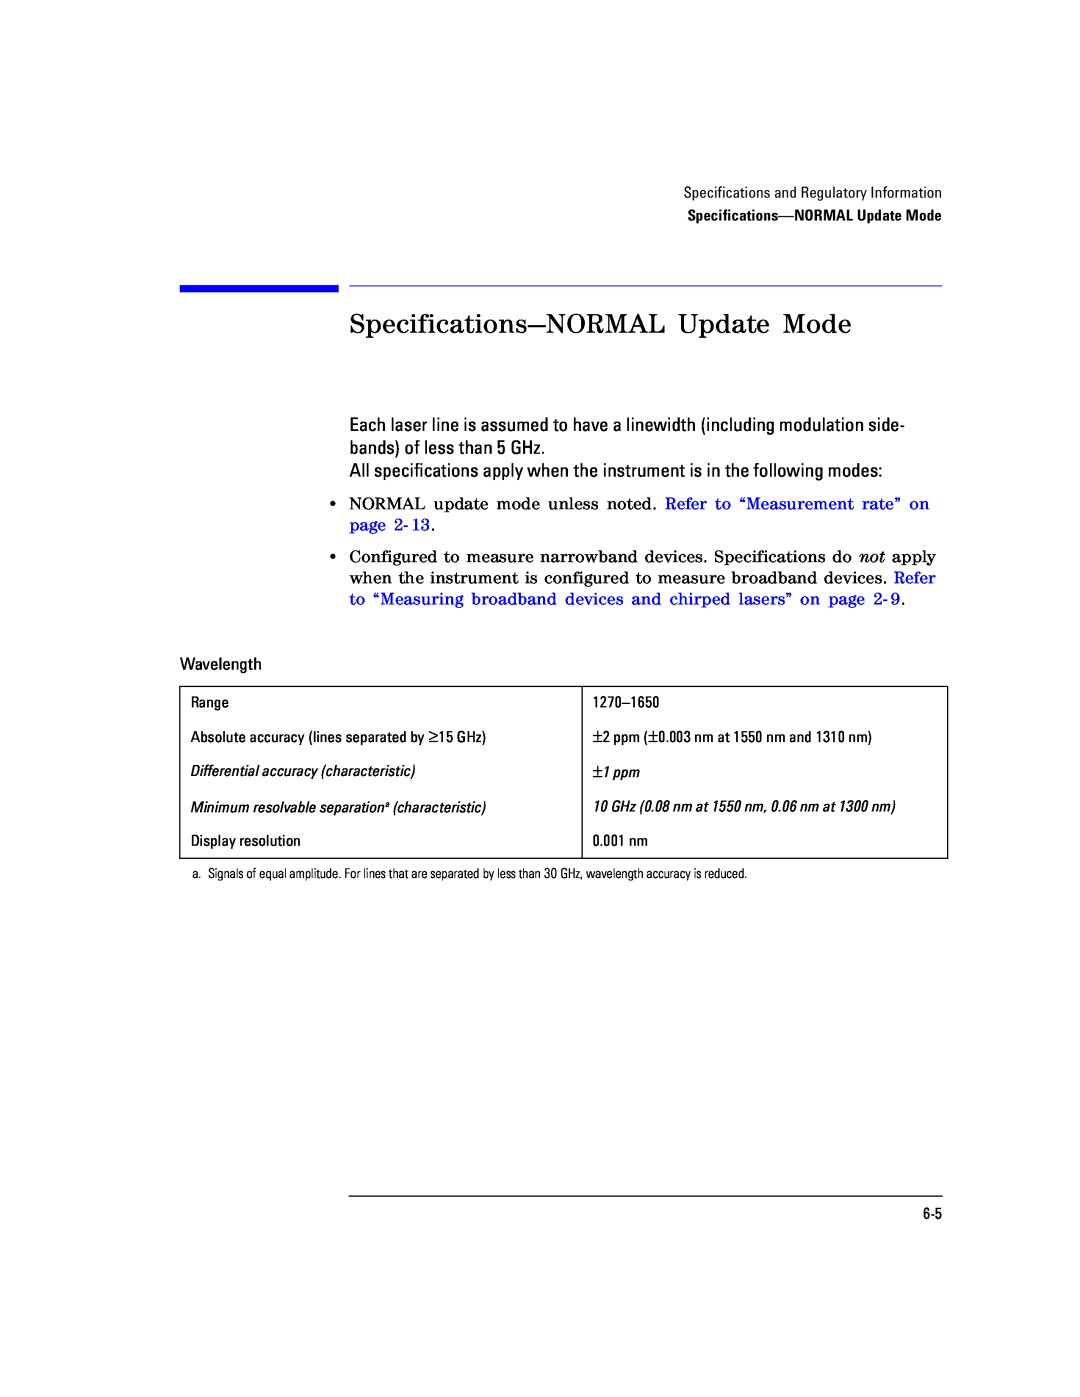 Agilent Technologies Agilent 86120C manual Specifications-NORMAL Update Mode, Wavelength 